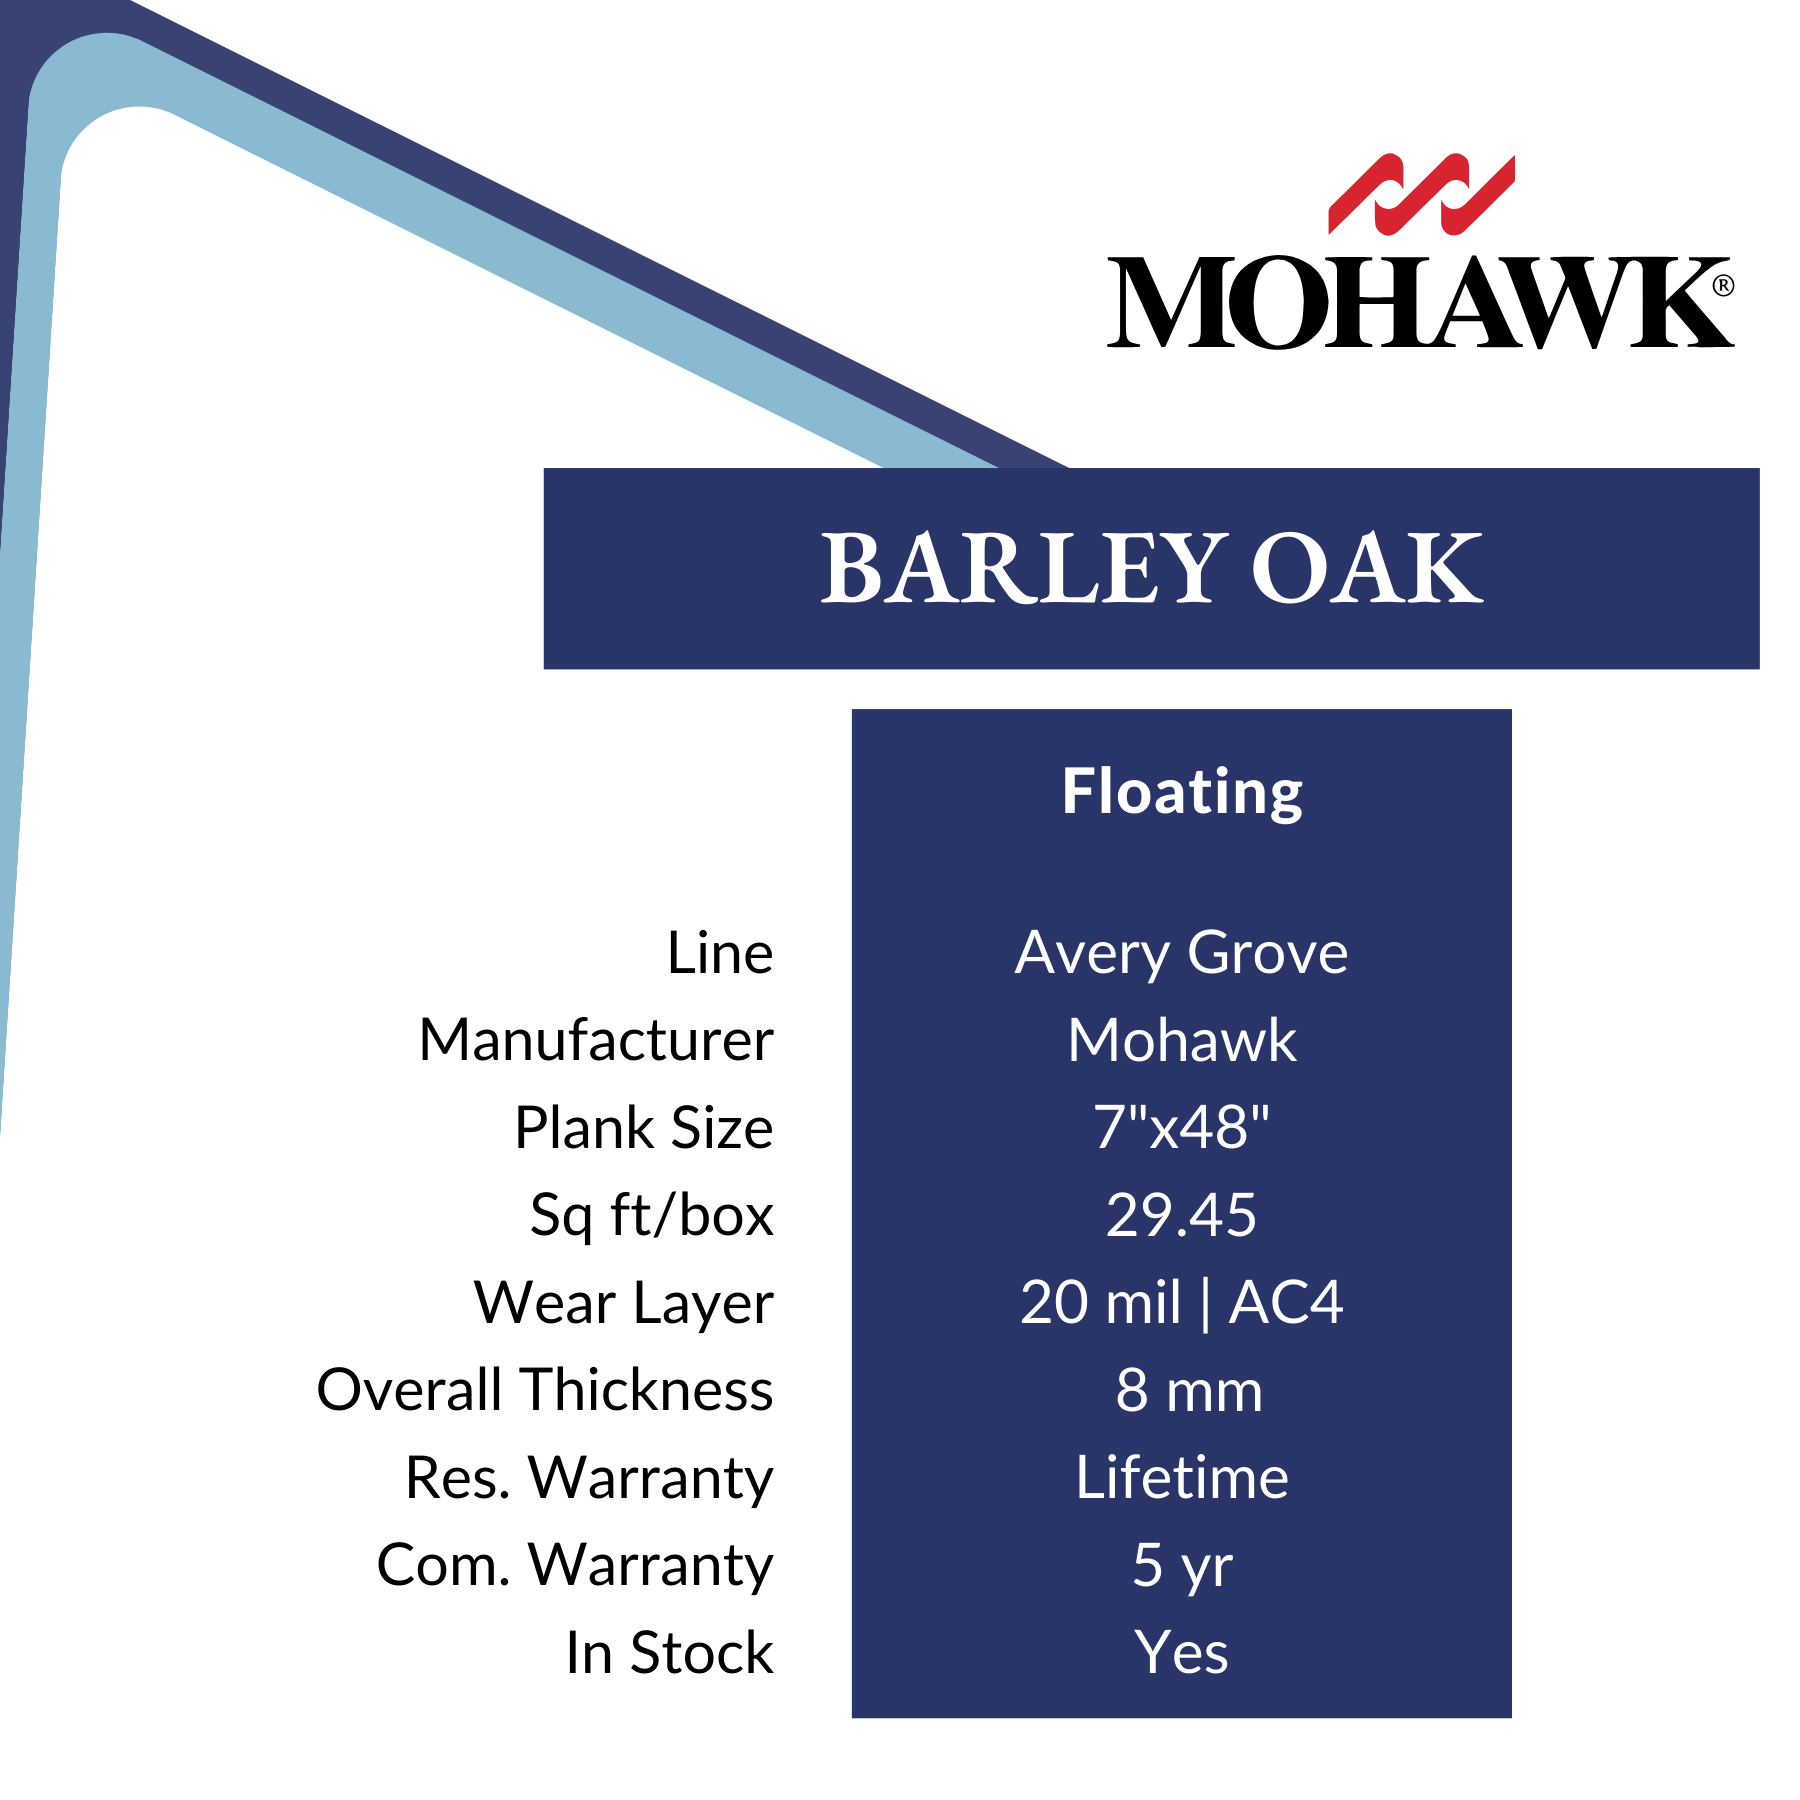 Barley Oak by Mohawk sold by Calhoun's Flooring, Springfield, IL Specs